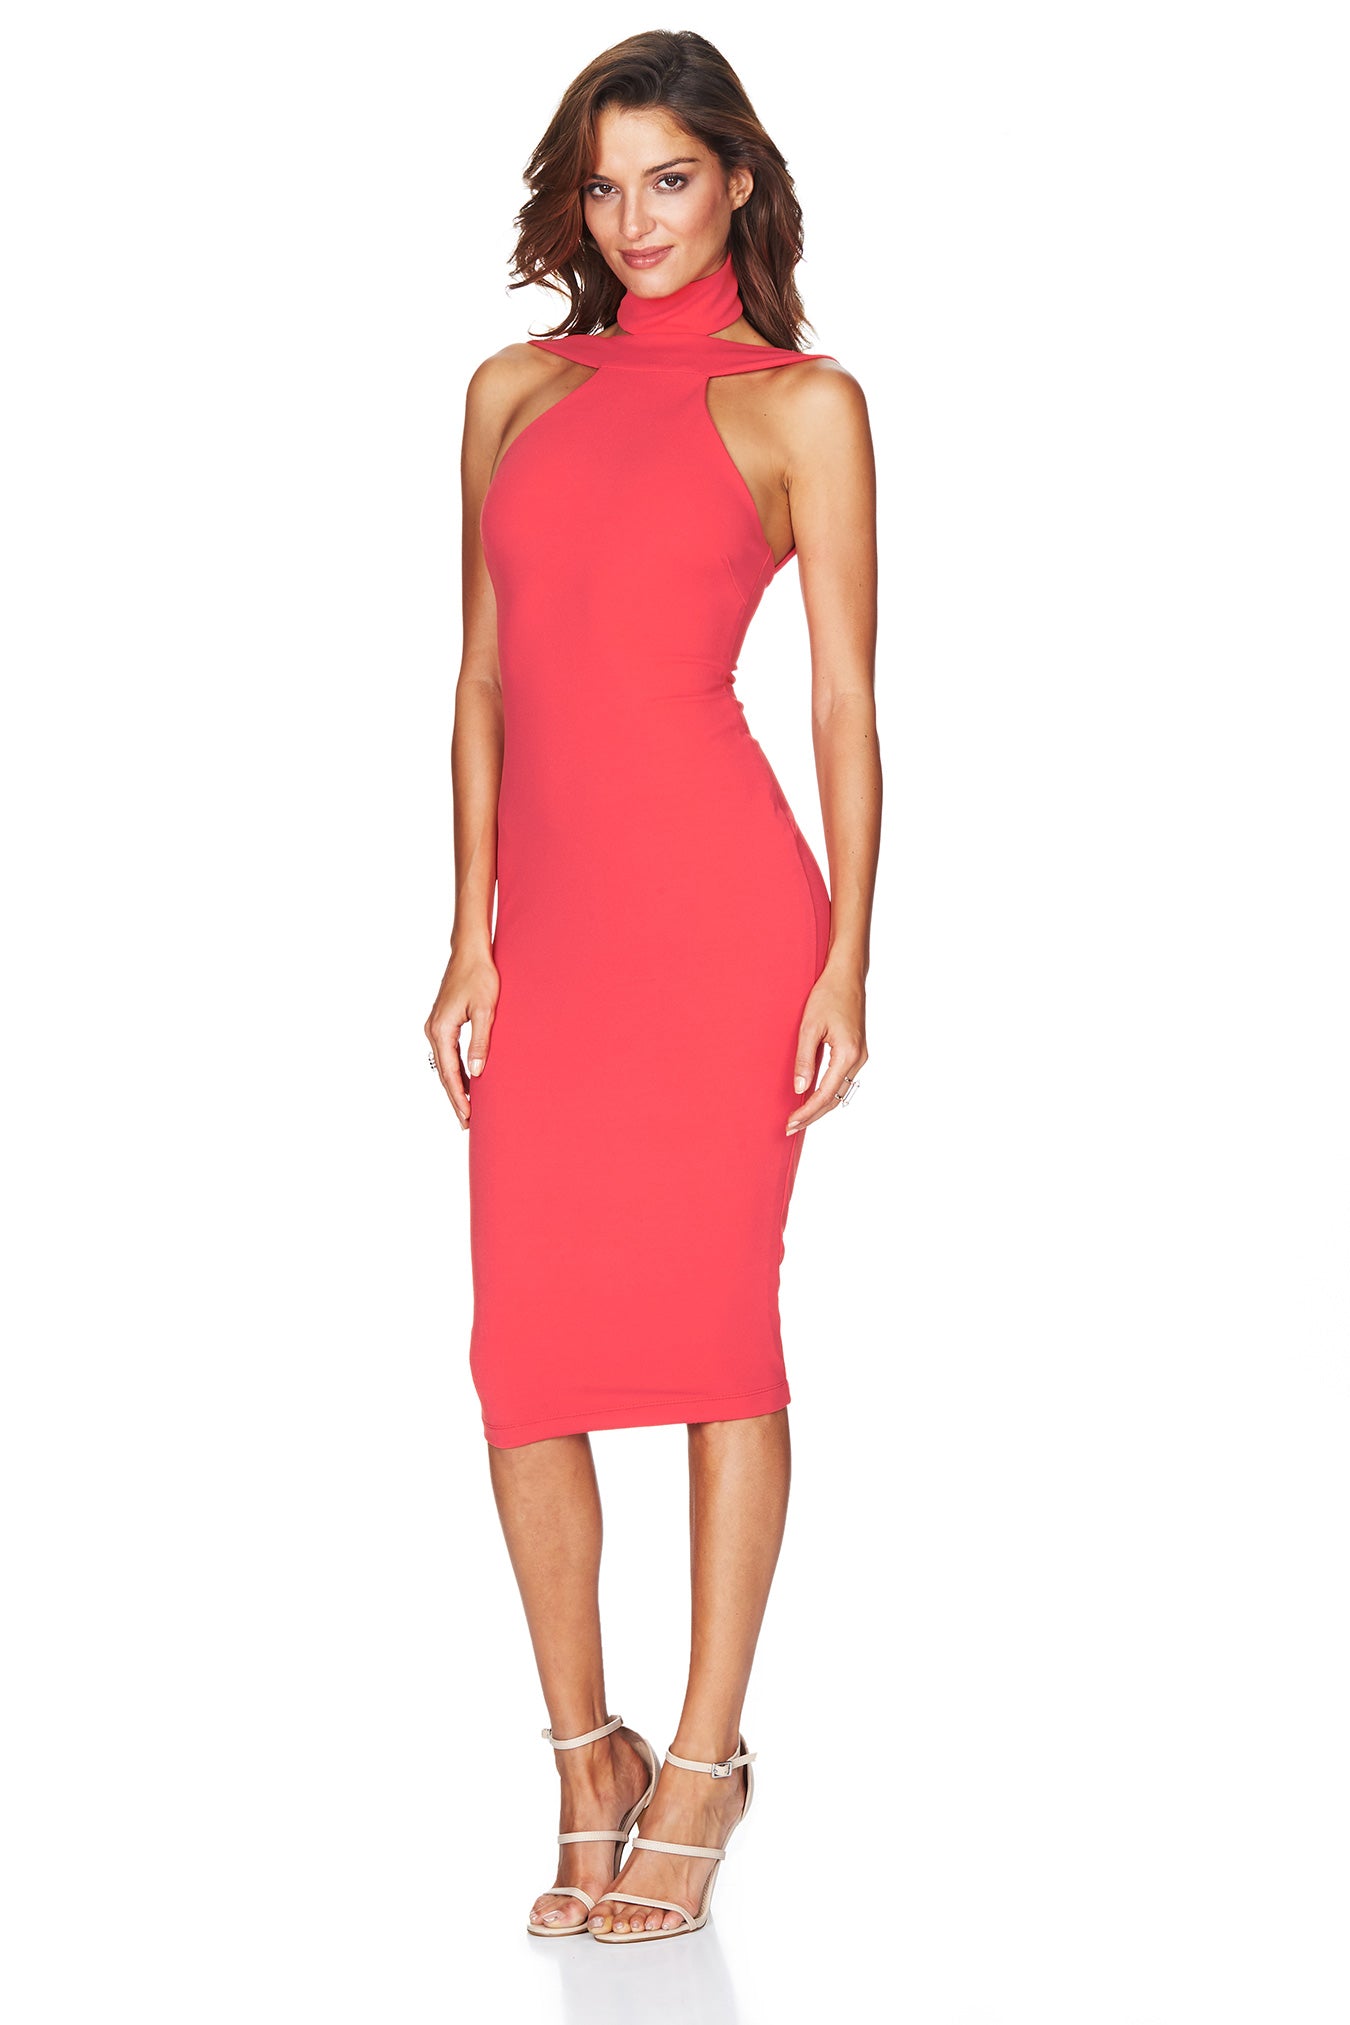 Nookie Celestial Midi Dress. salmon pink dress high neck cut out shoulders midi length front view